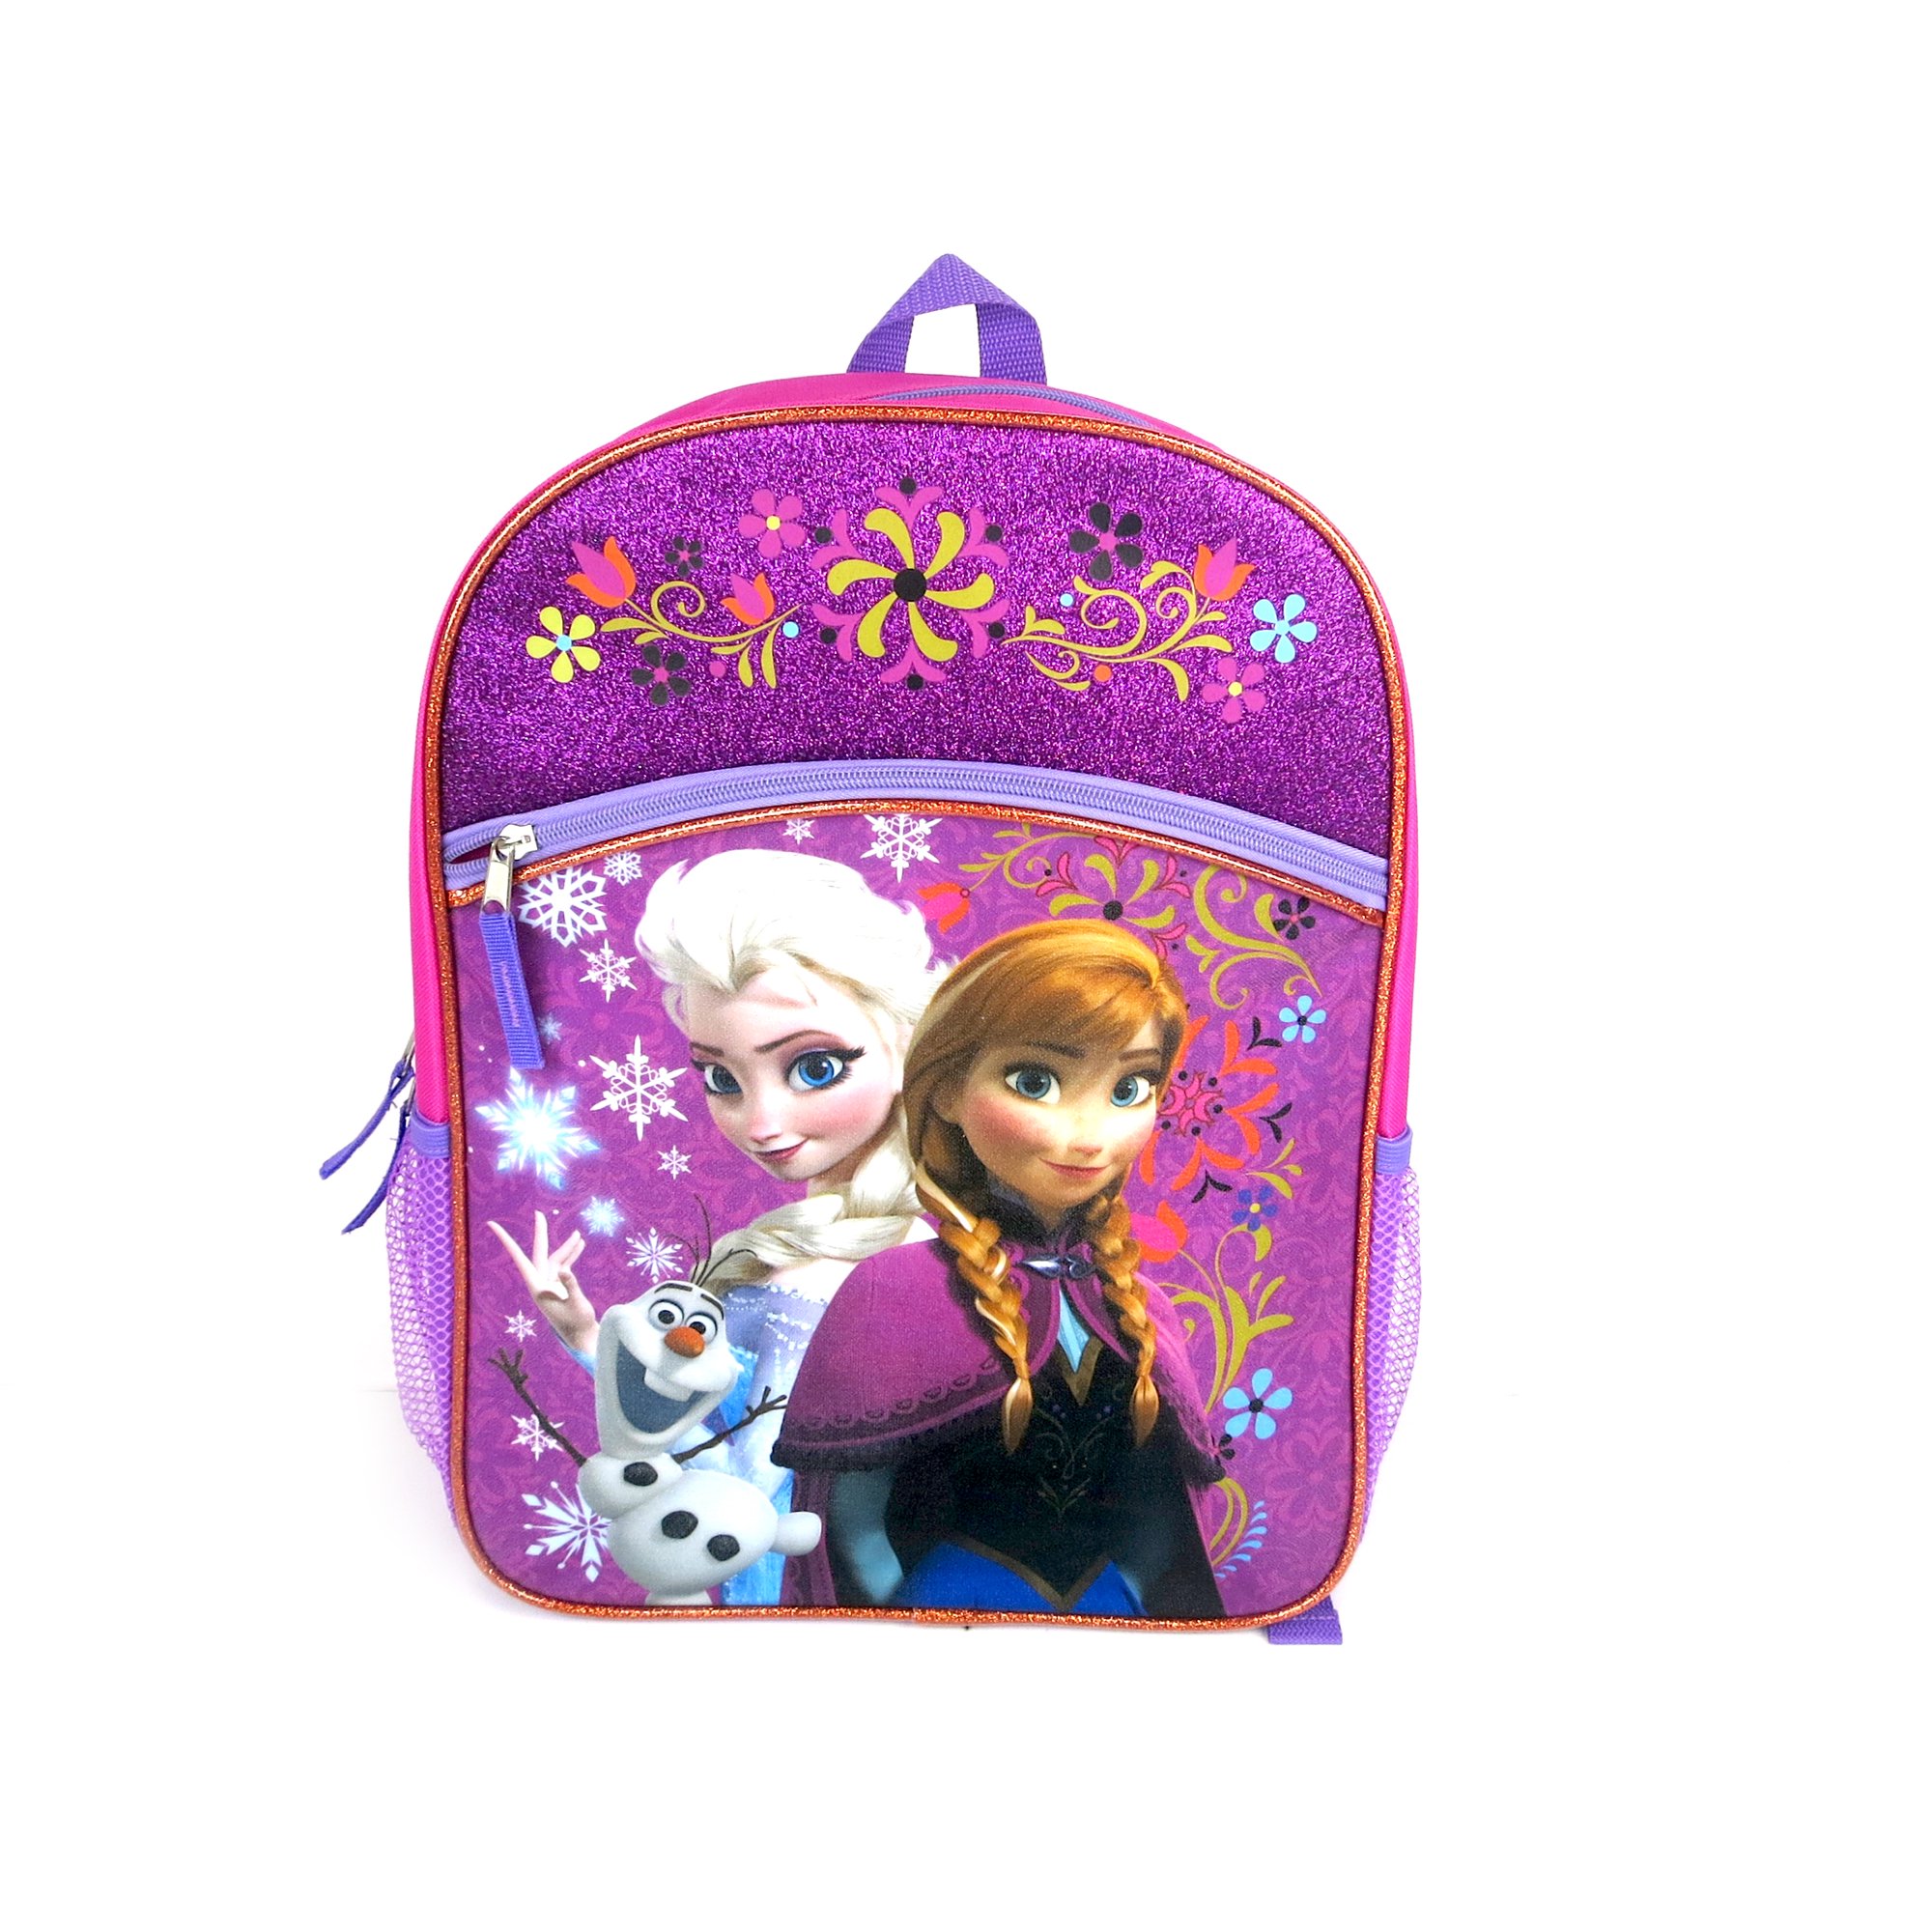 Disney Frozen Elsa Anna Olaf Girls' Purple Pink Backpack - image 1 of 3